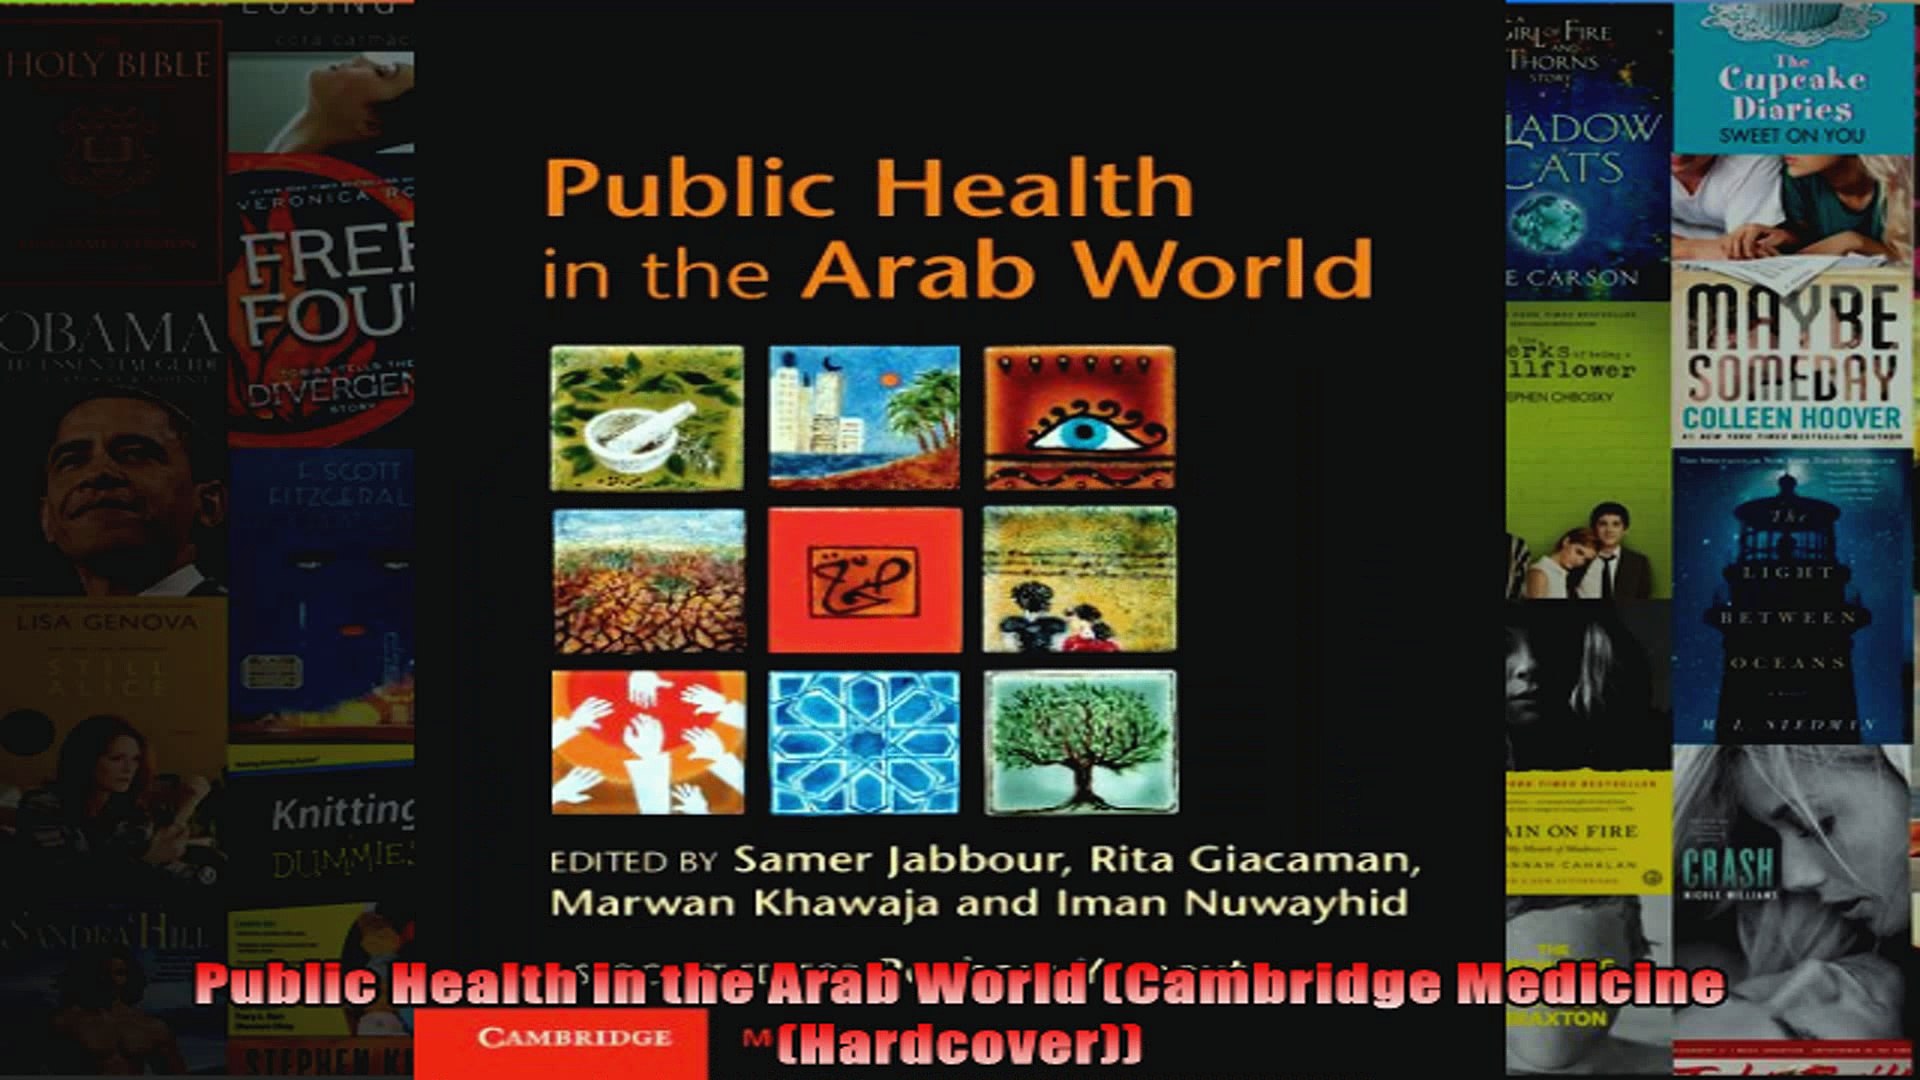 Public Health in the Arab World Cambridge Medicine Hardcover